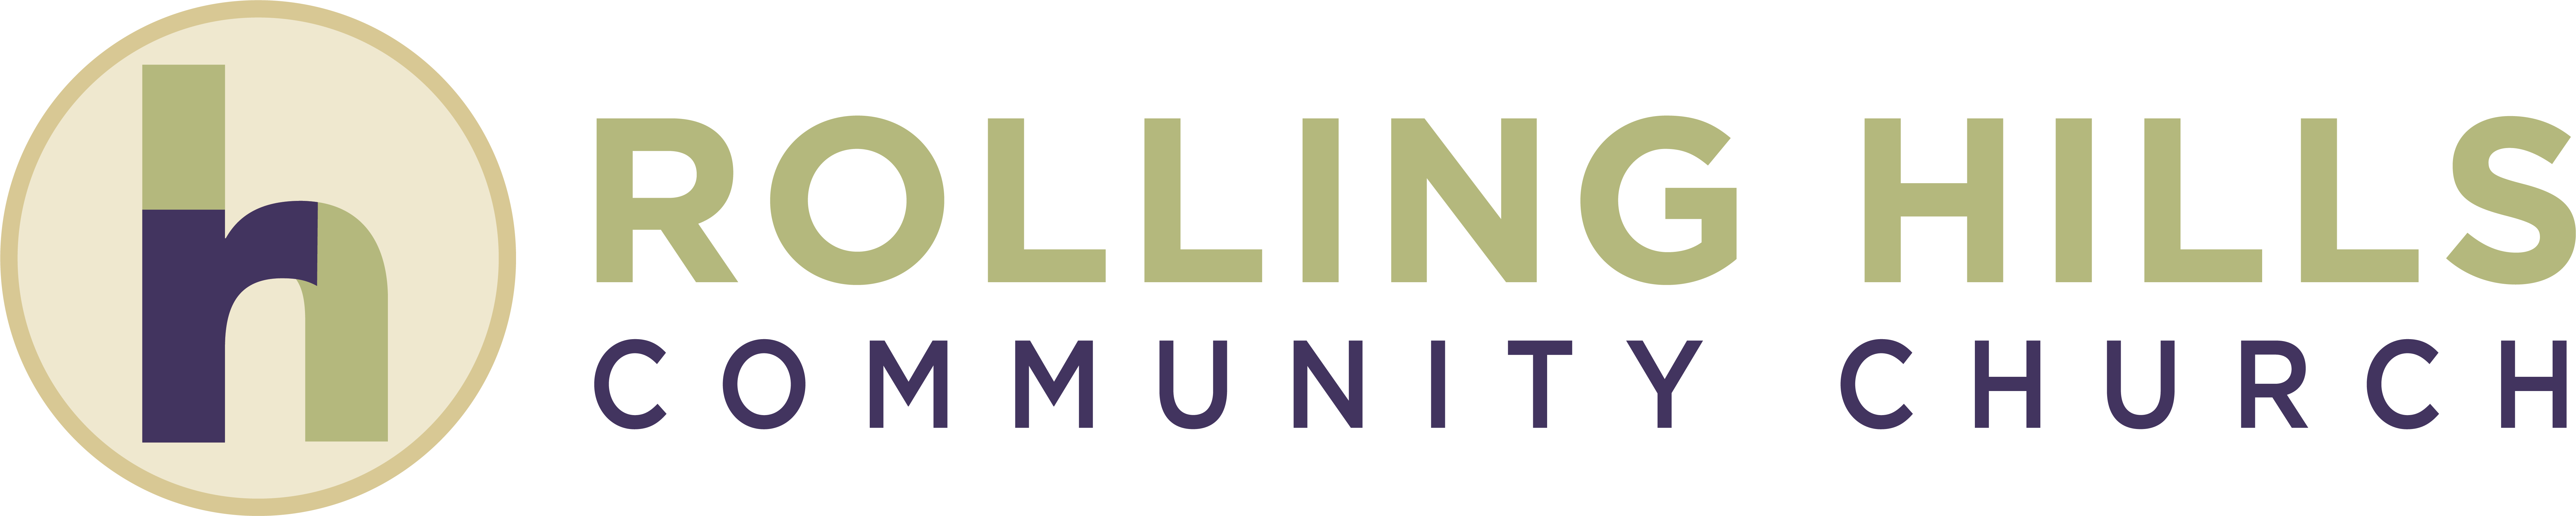 Rolling Hills Community Church logo